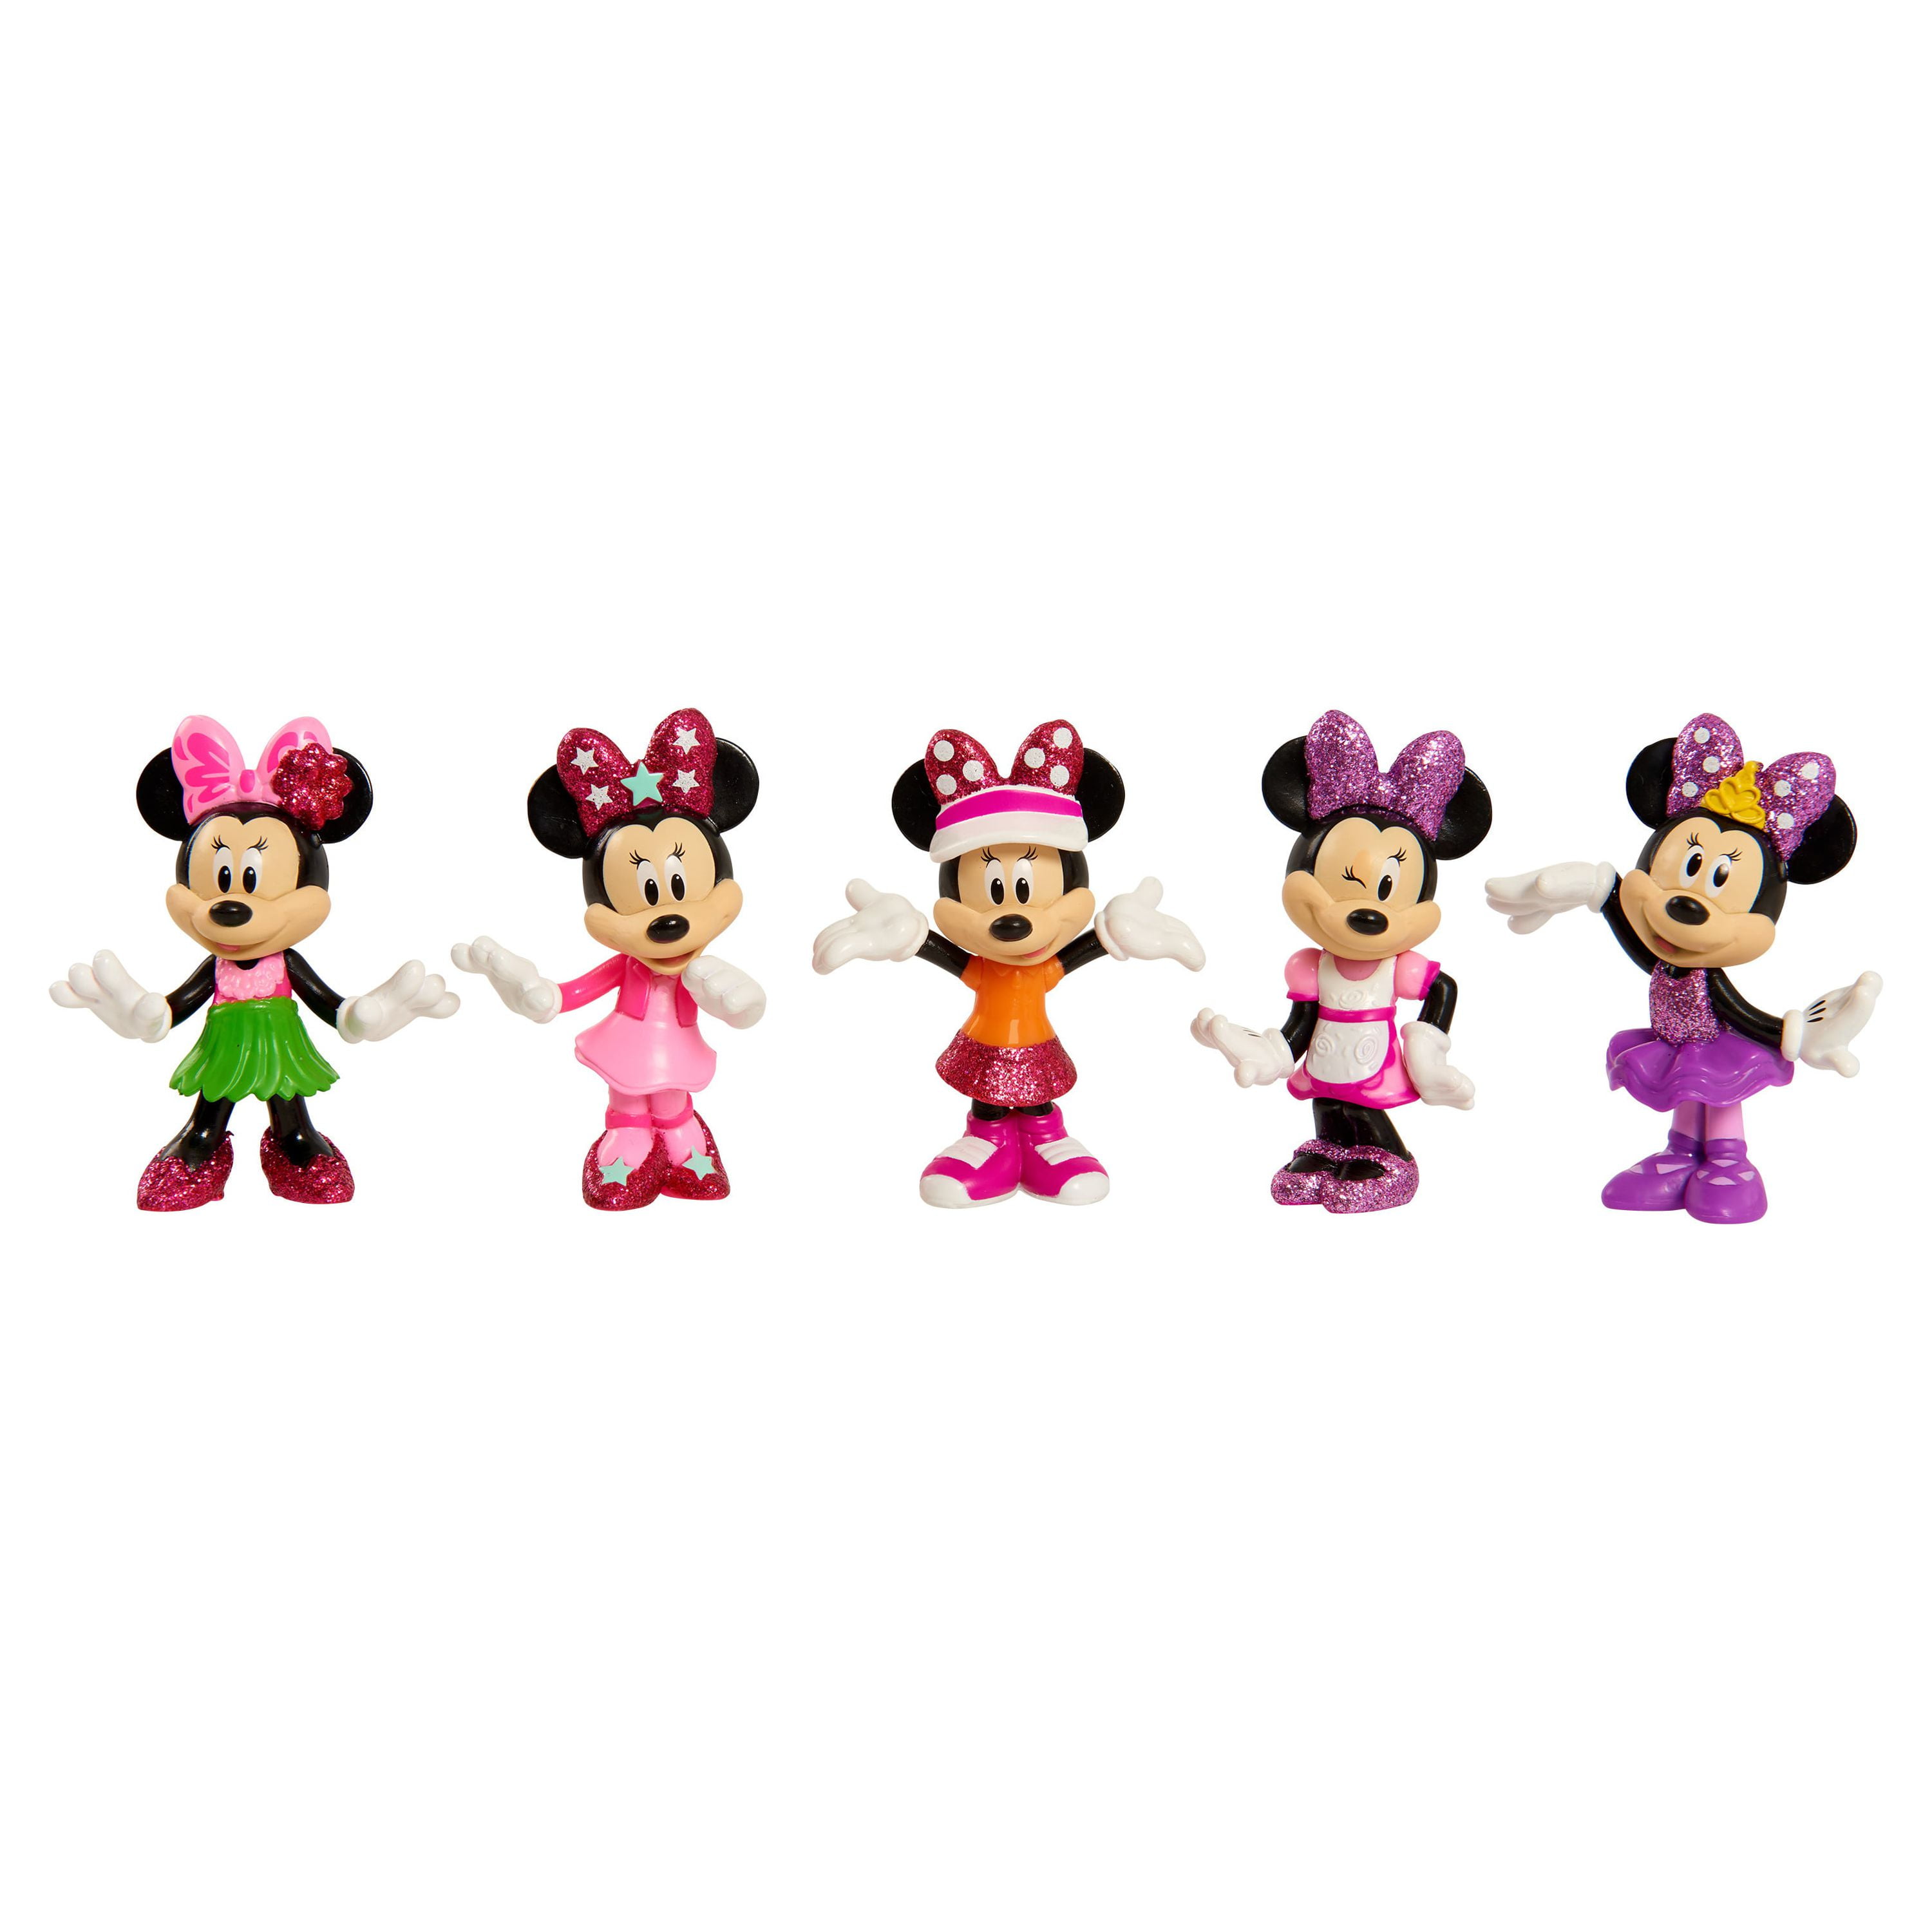 Jouet Minnie Fashionista Fitness Disney IMC Toys figurine à habiller Gym Fun